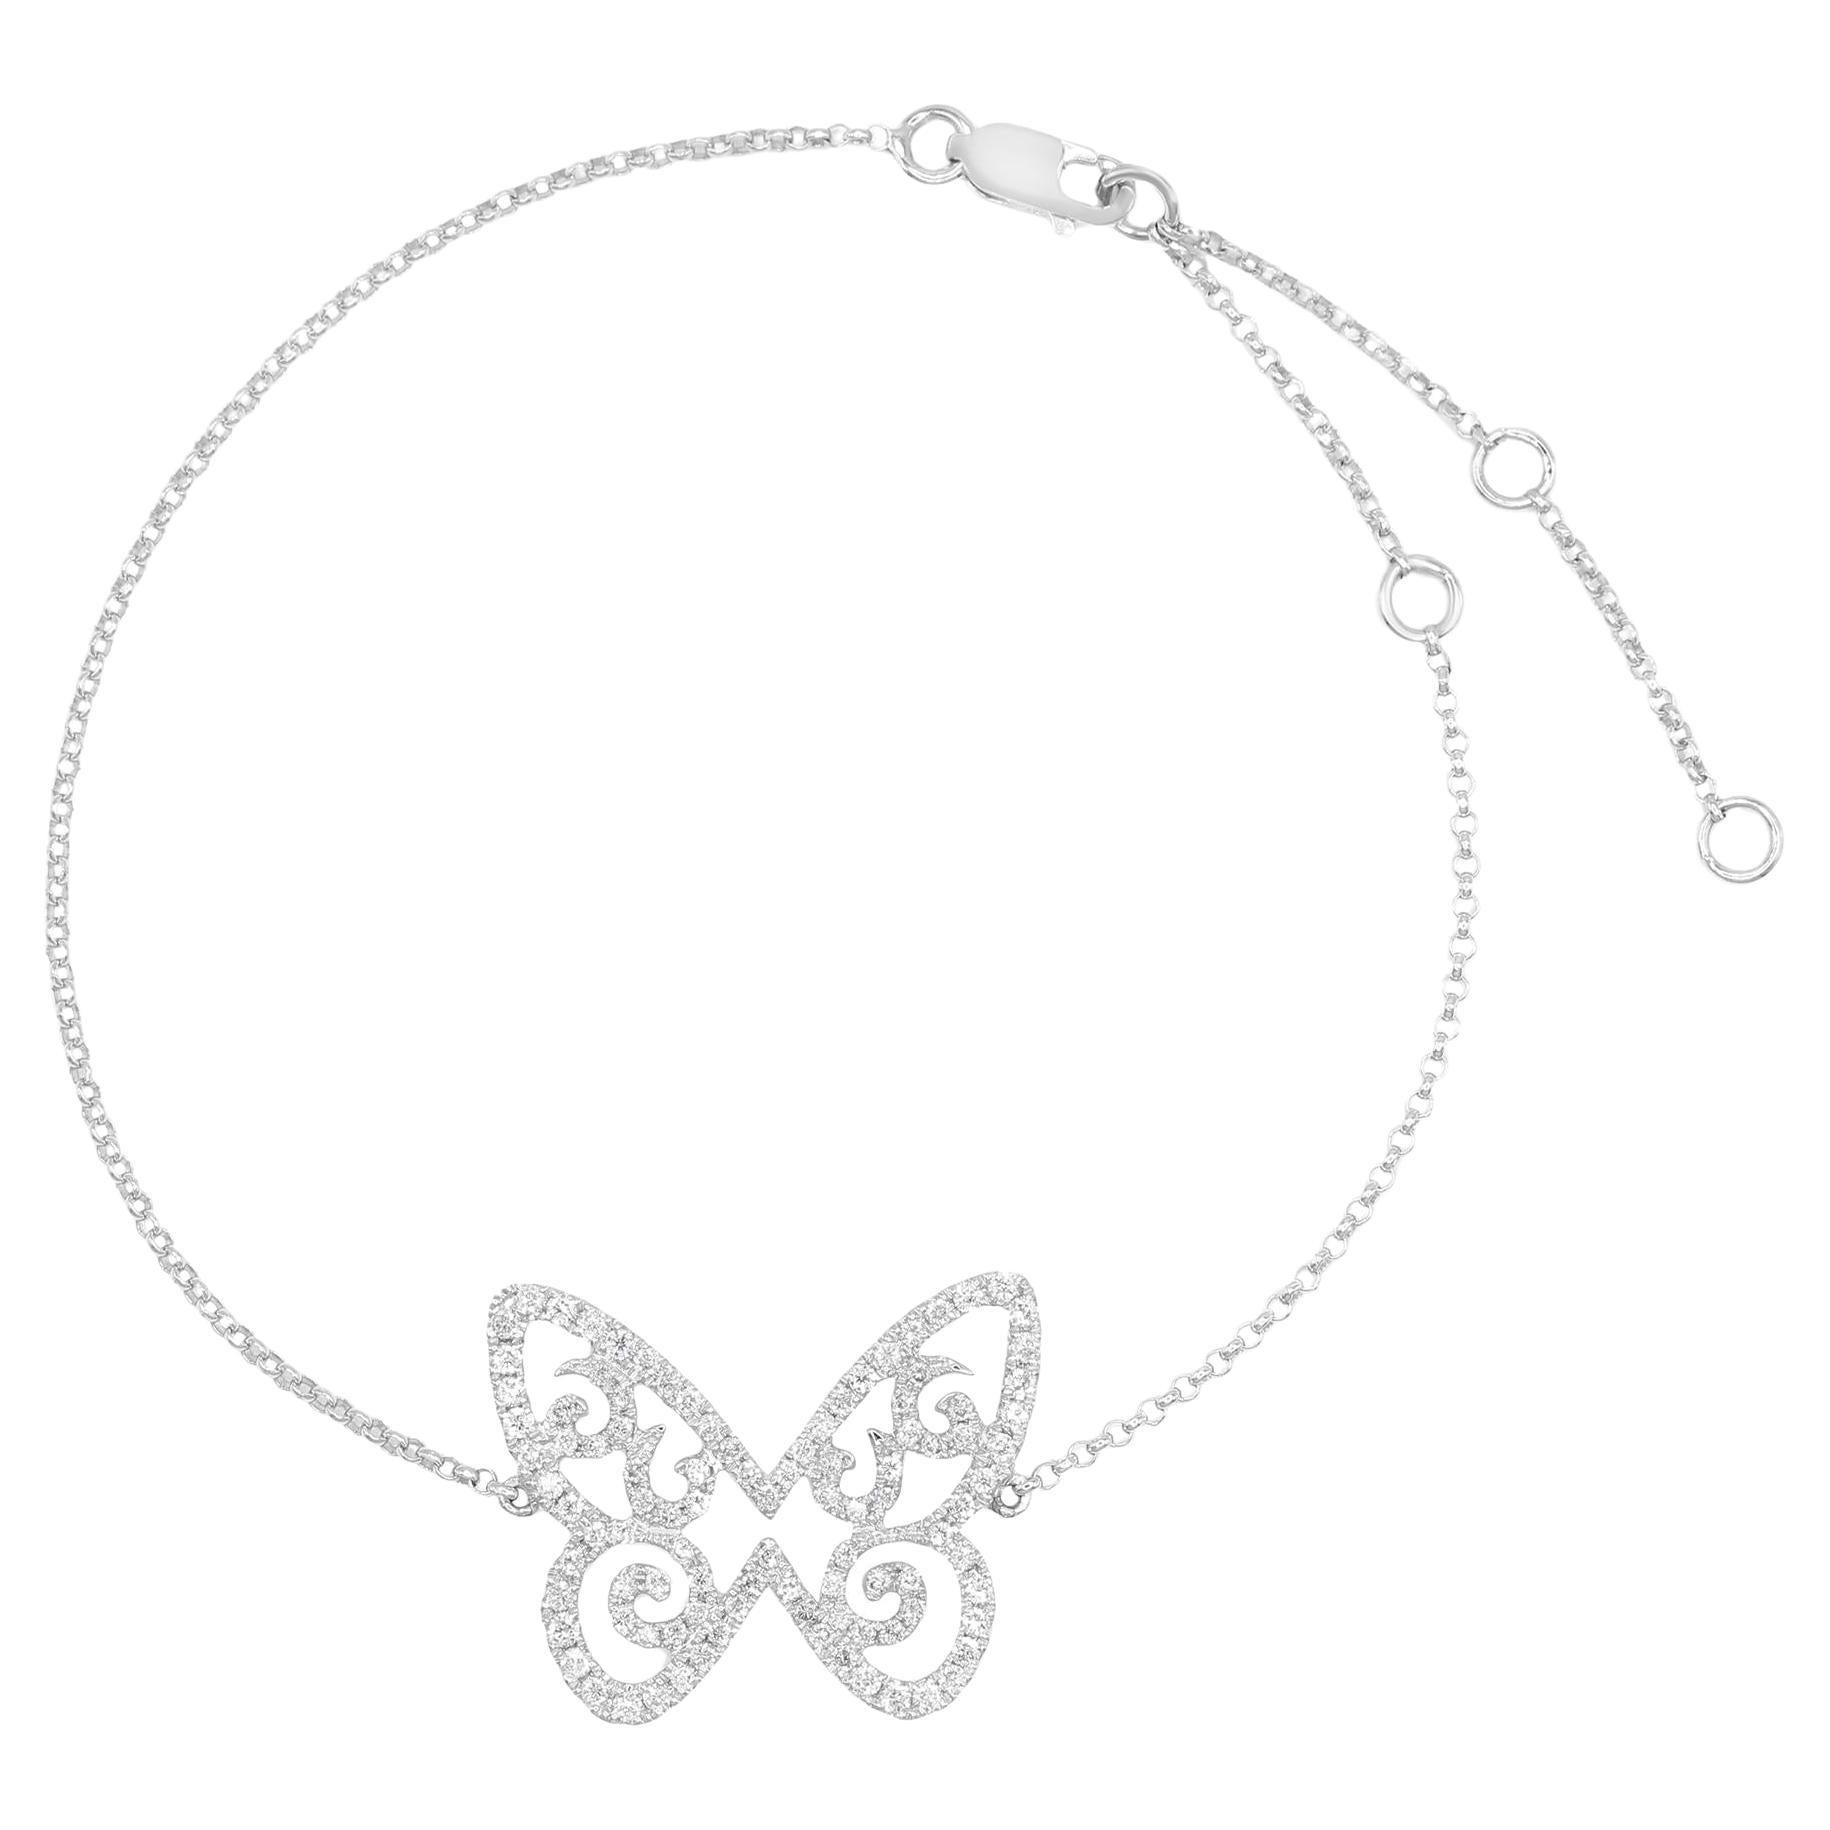 Rachel Koen Simple Diamond Butterfly Chain Bracelet 18K White Gold 0.46cttw For Sale